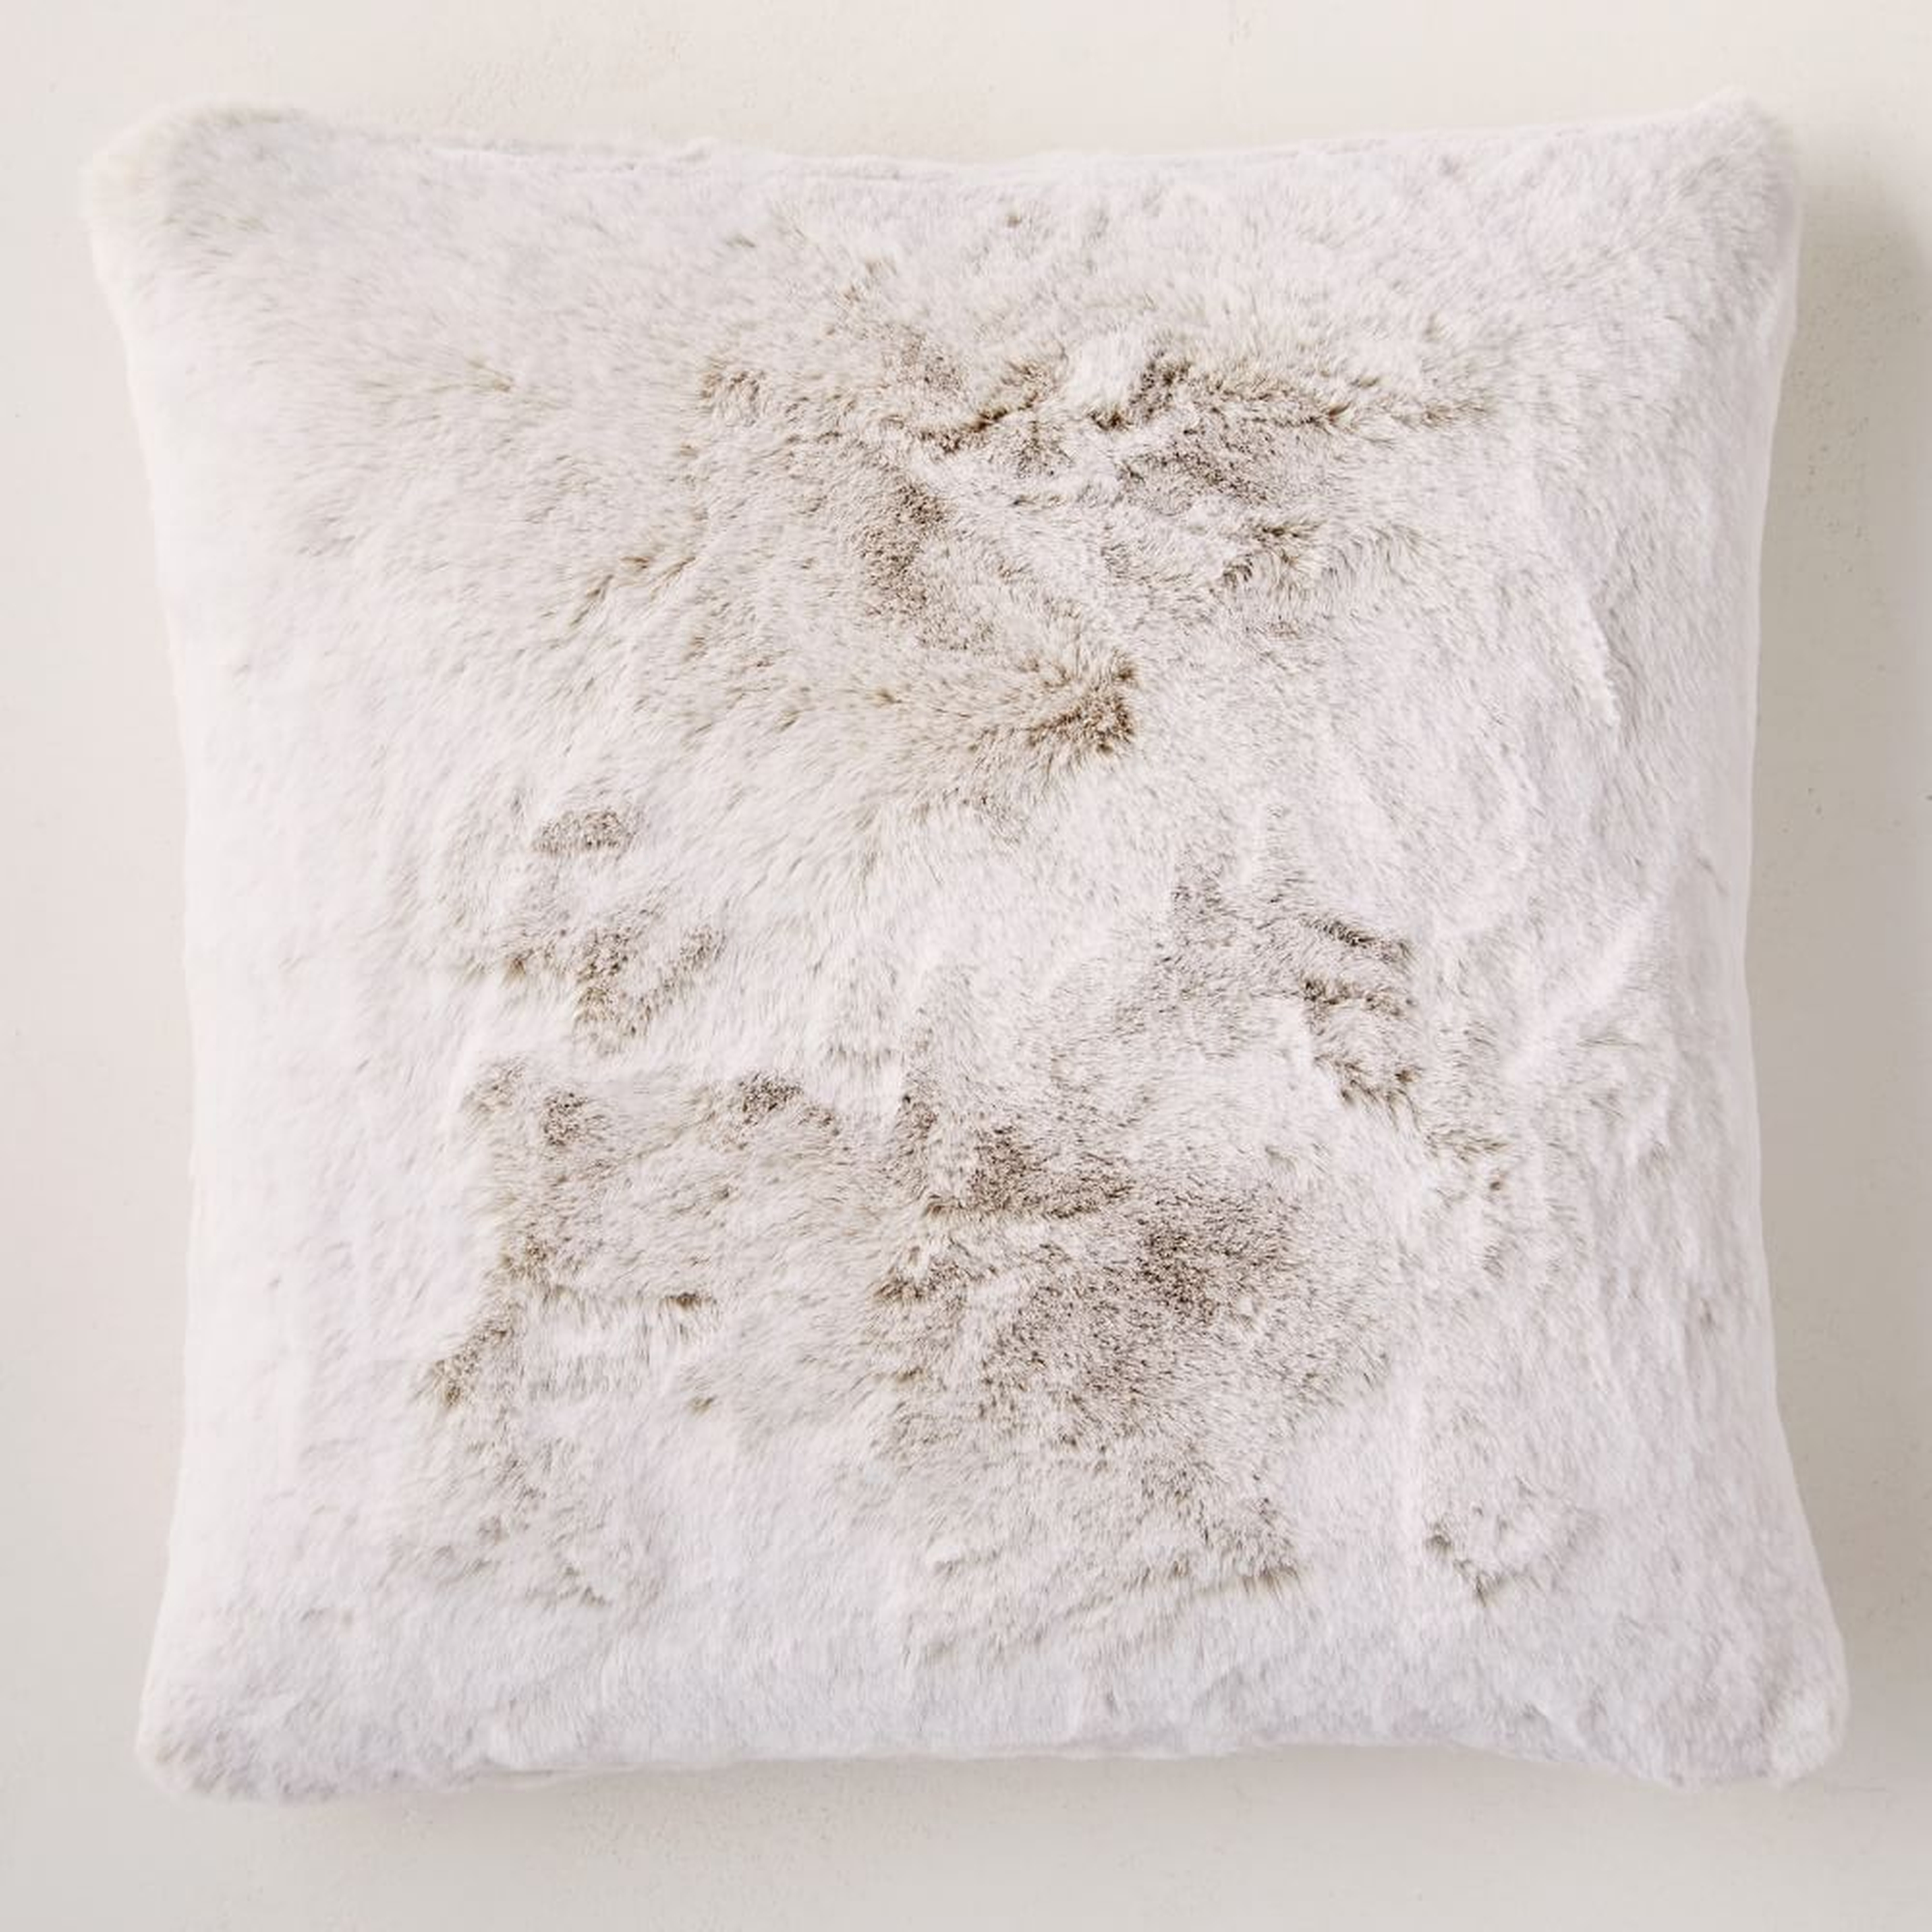 Faux Fur Chinchilla Pillow Cover, Set of 2, White, 20"x20" - West Elm